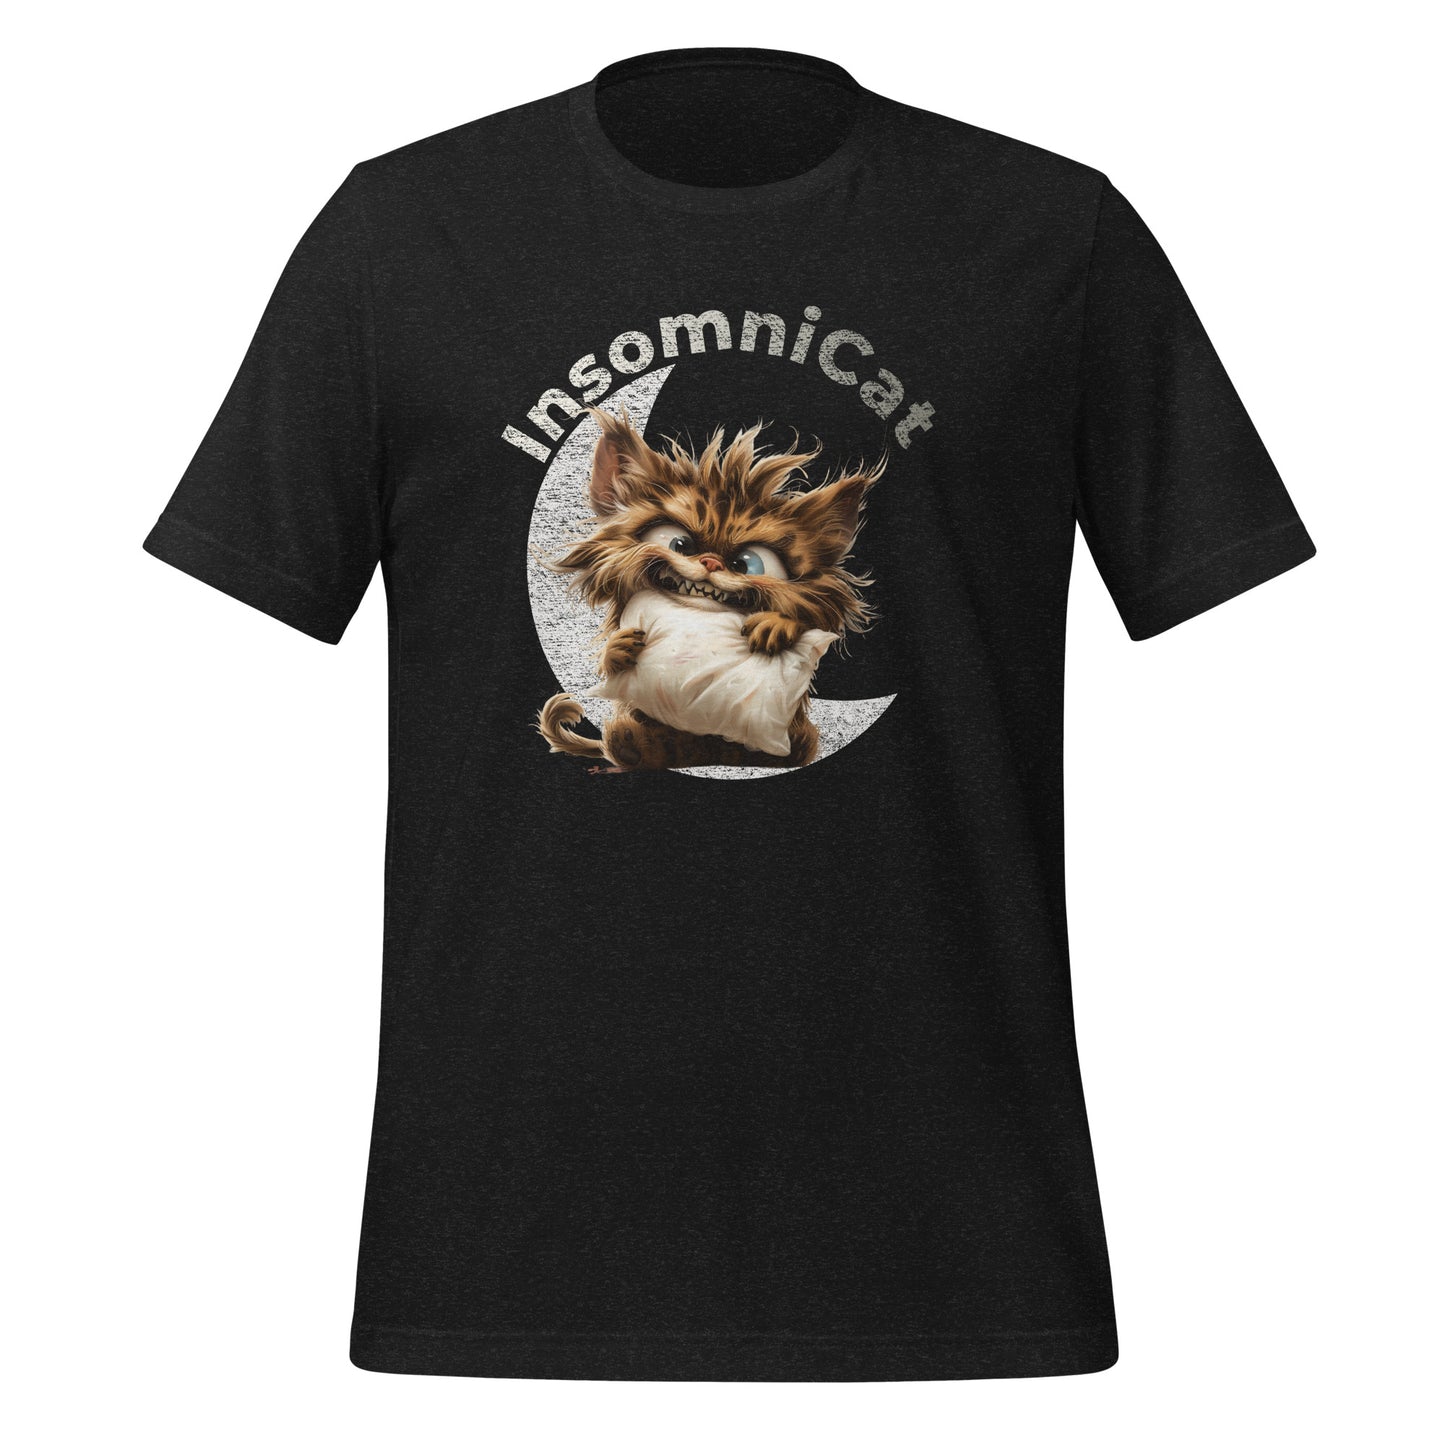 InsomniCat, Insomniac Cat, Insomnia, Animals, Sleep Disorders, Graphic Tee Shirt, Black